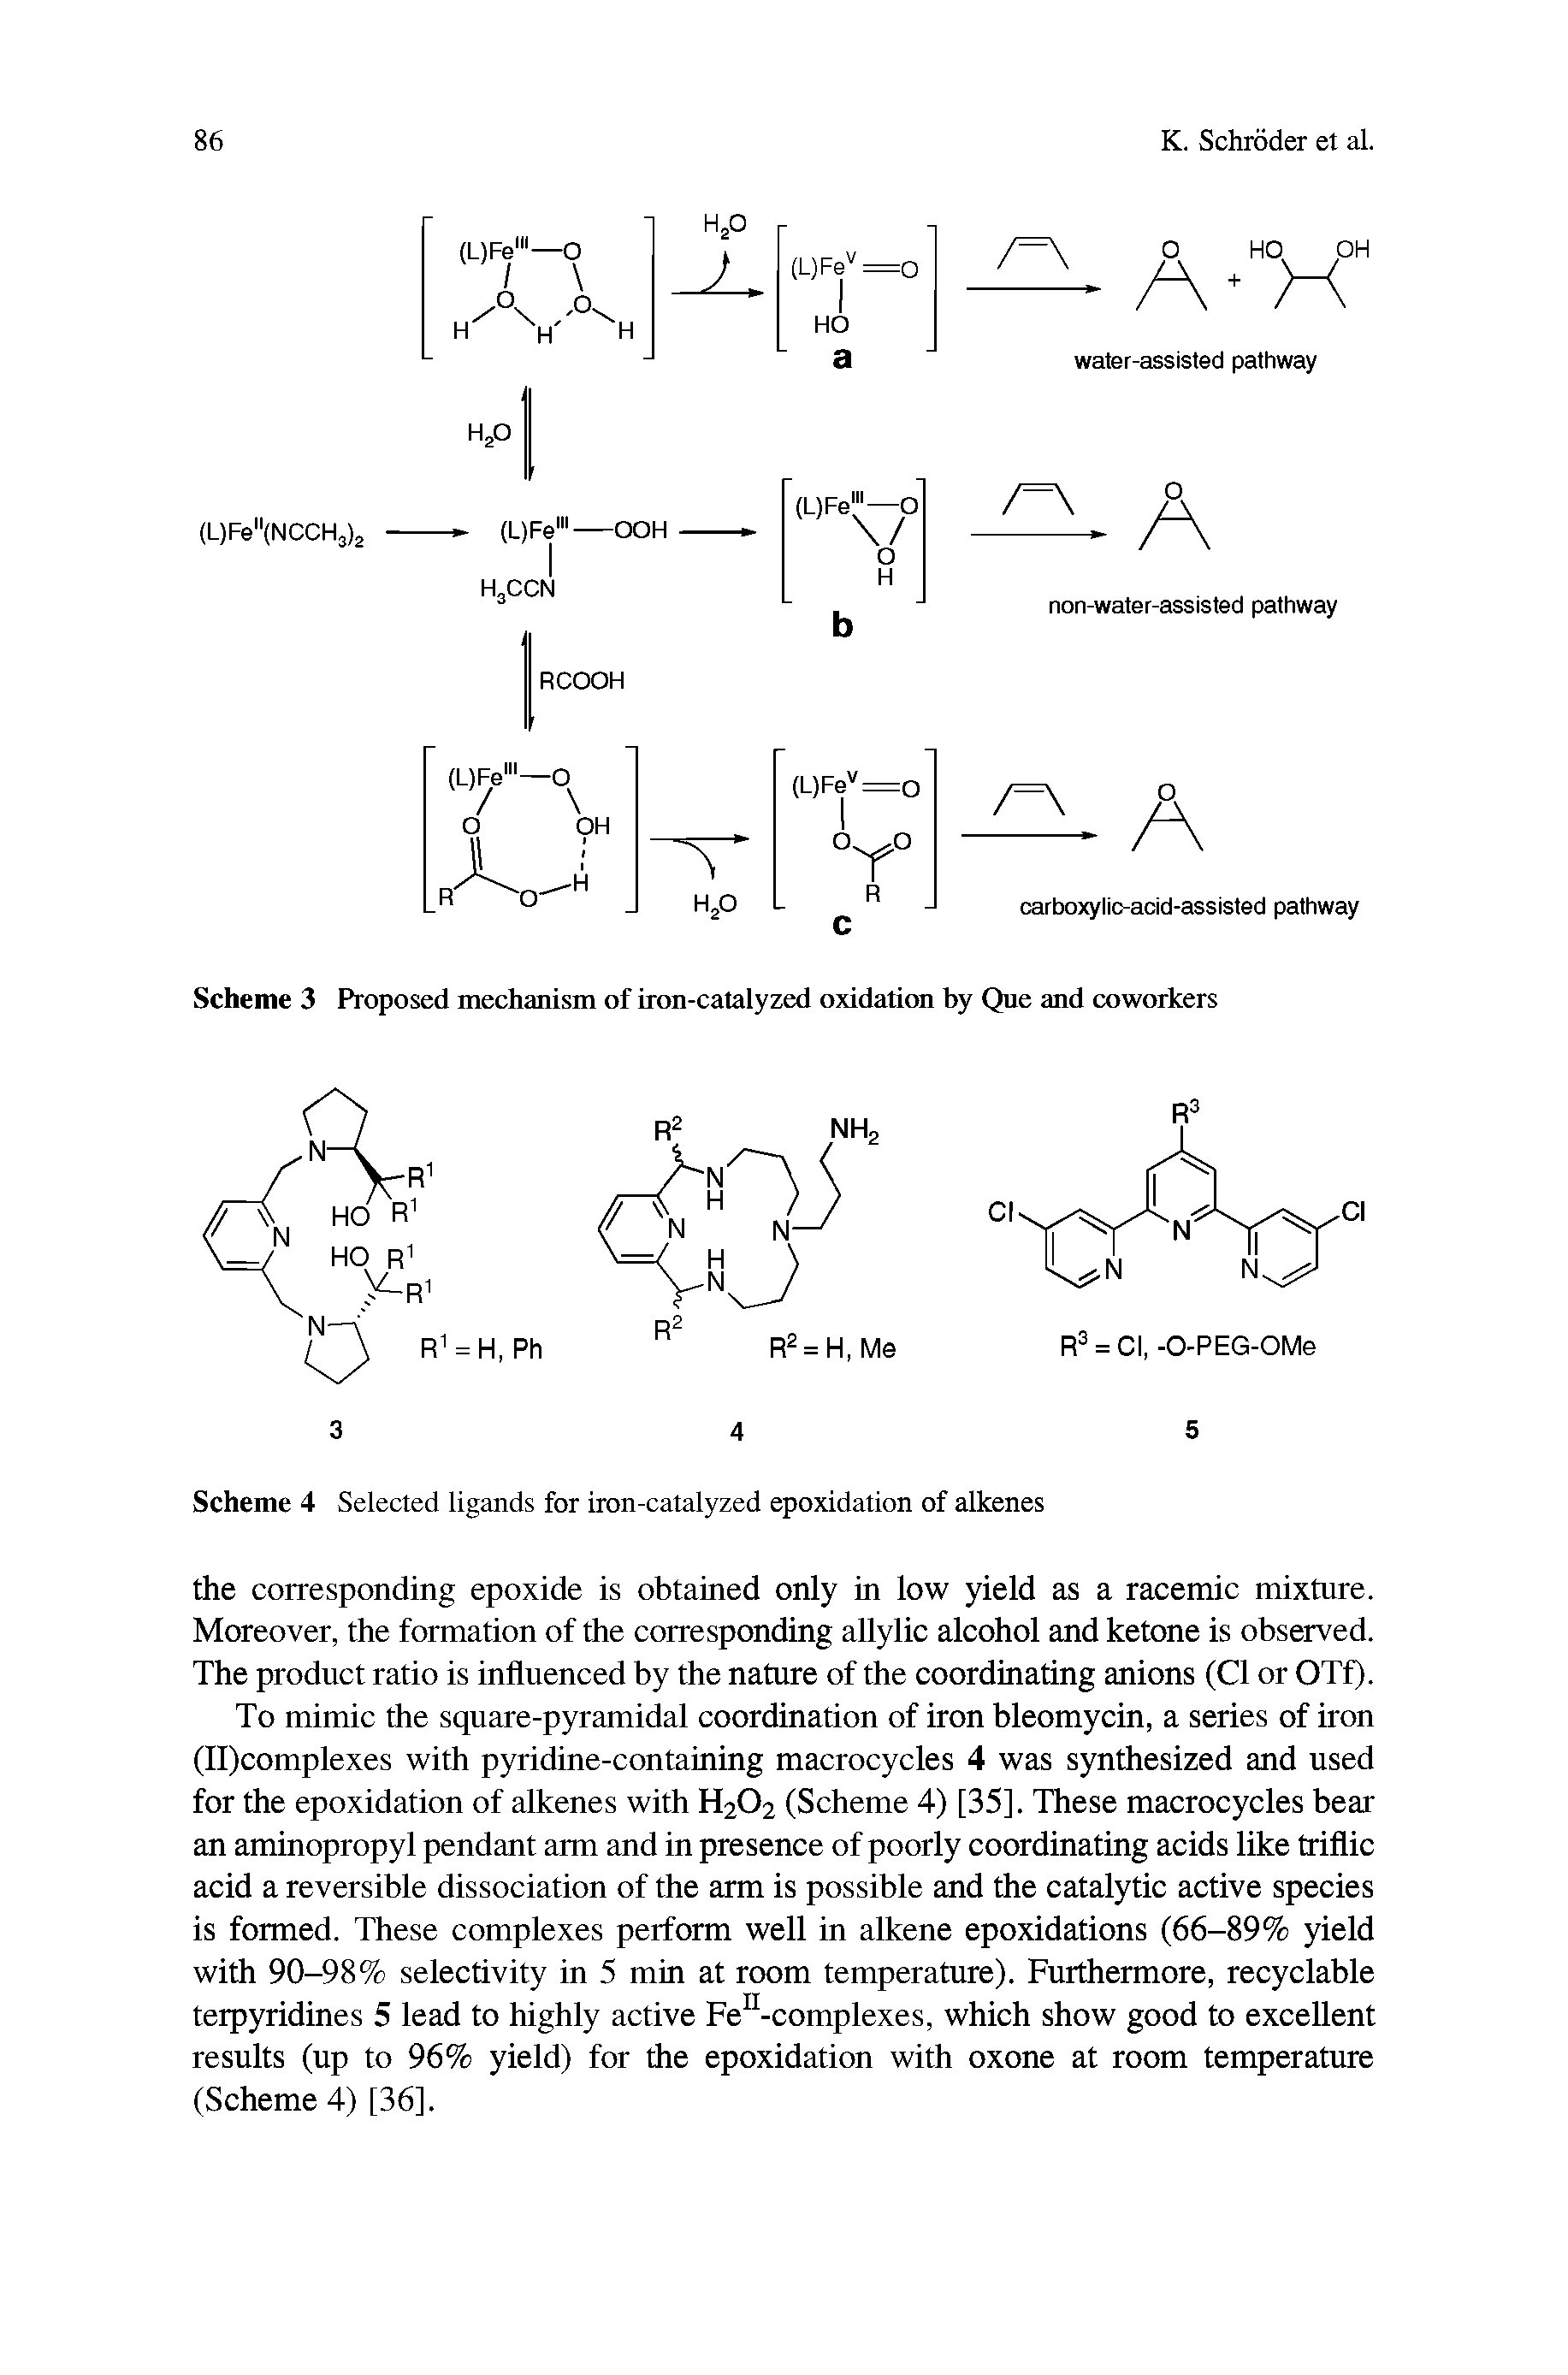 Scheme 4 Selected ligands for iron-catalyzed epoxidation of alkenes...